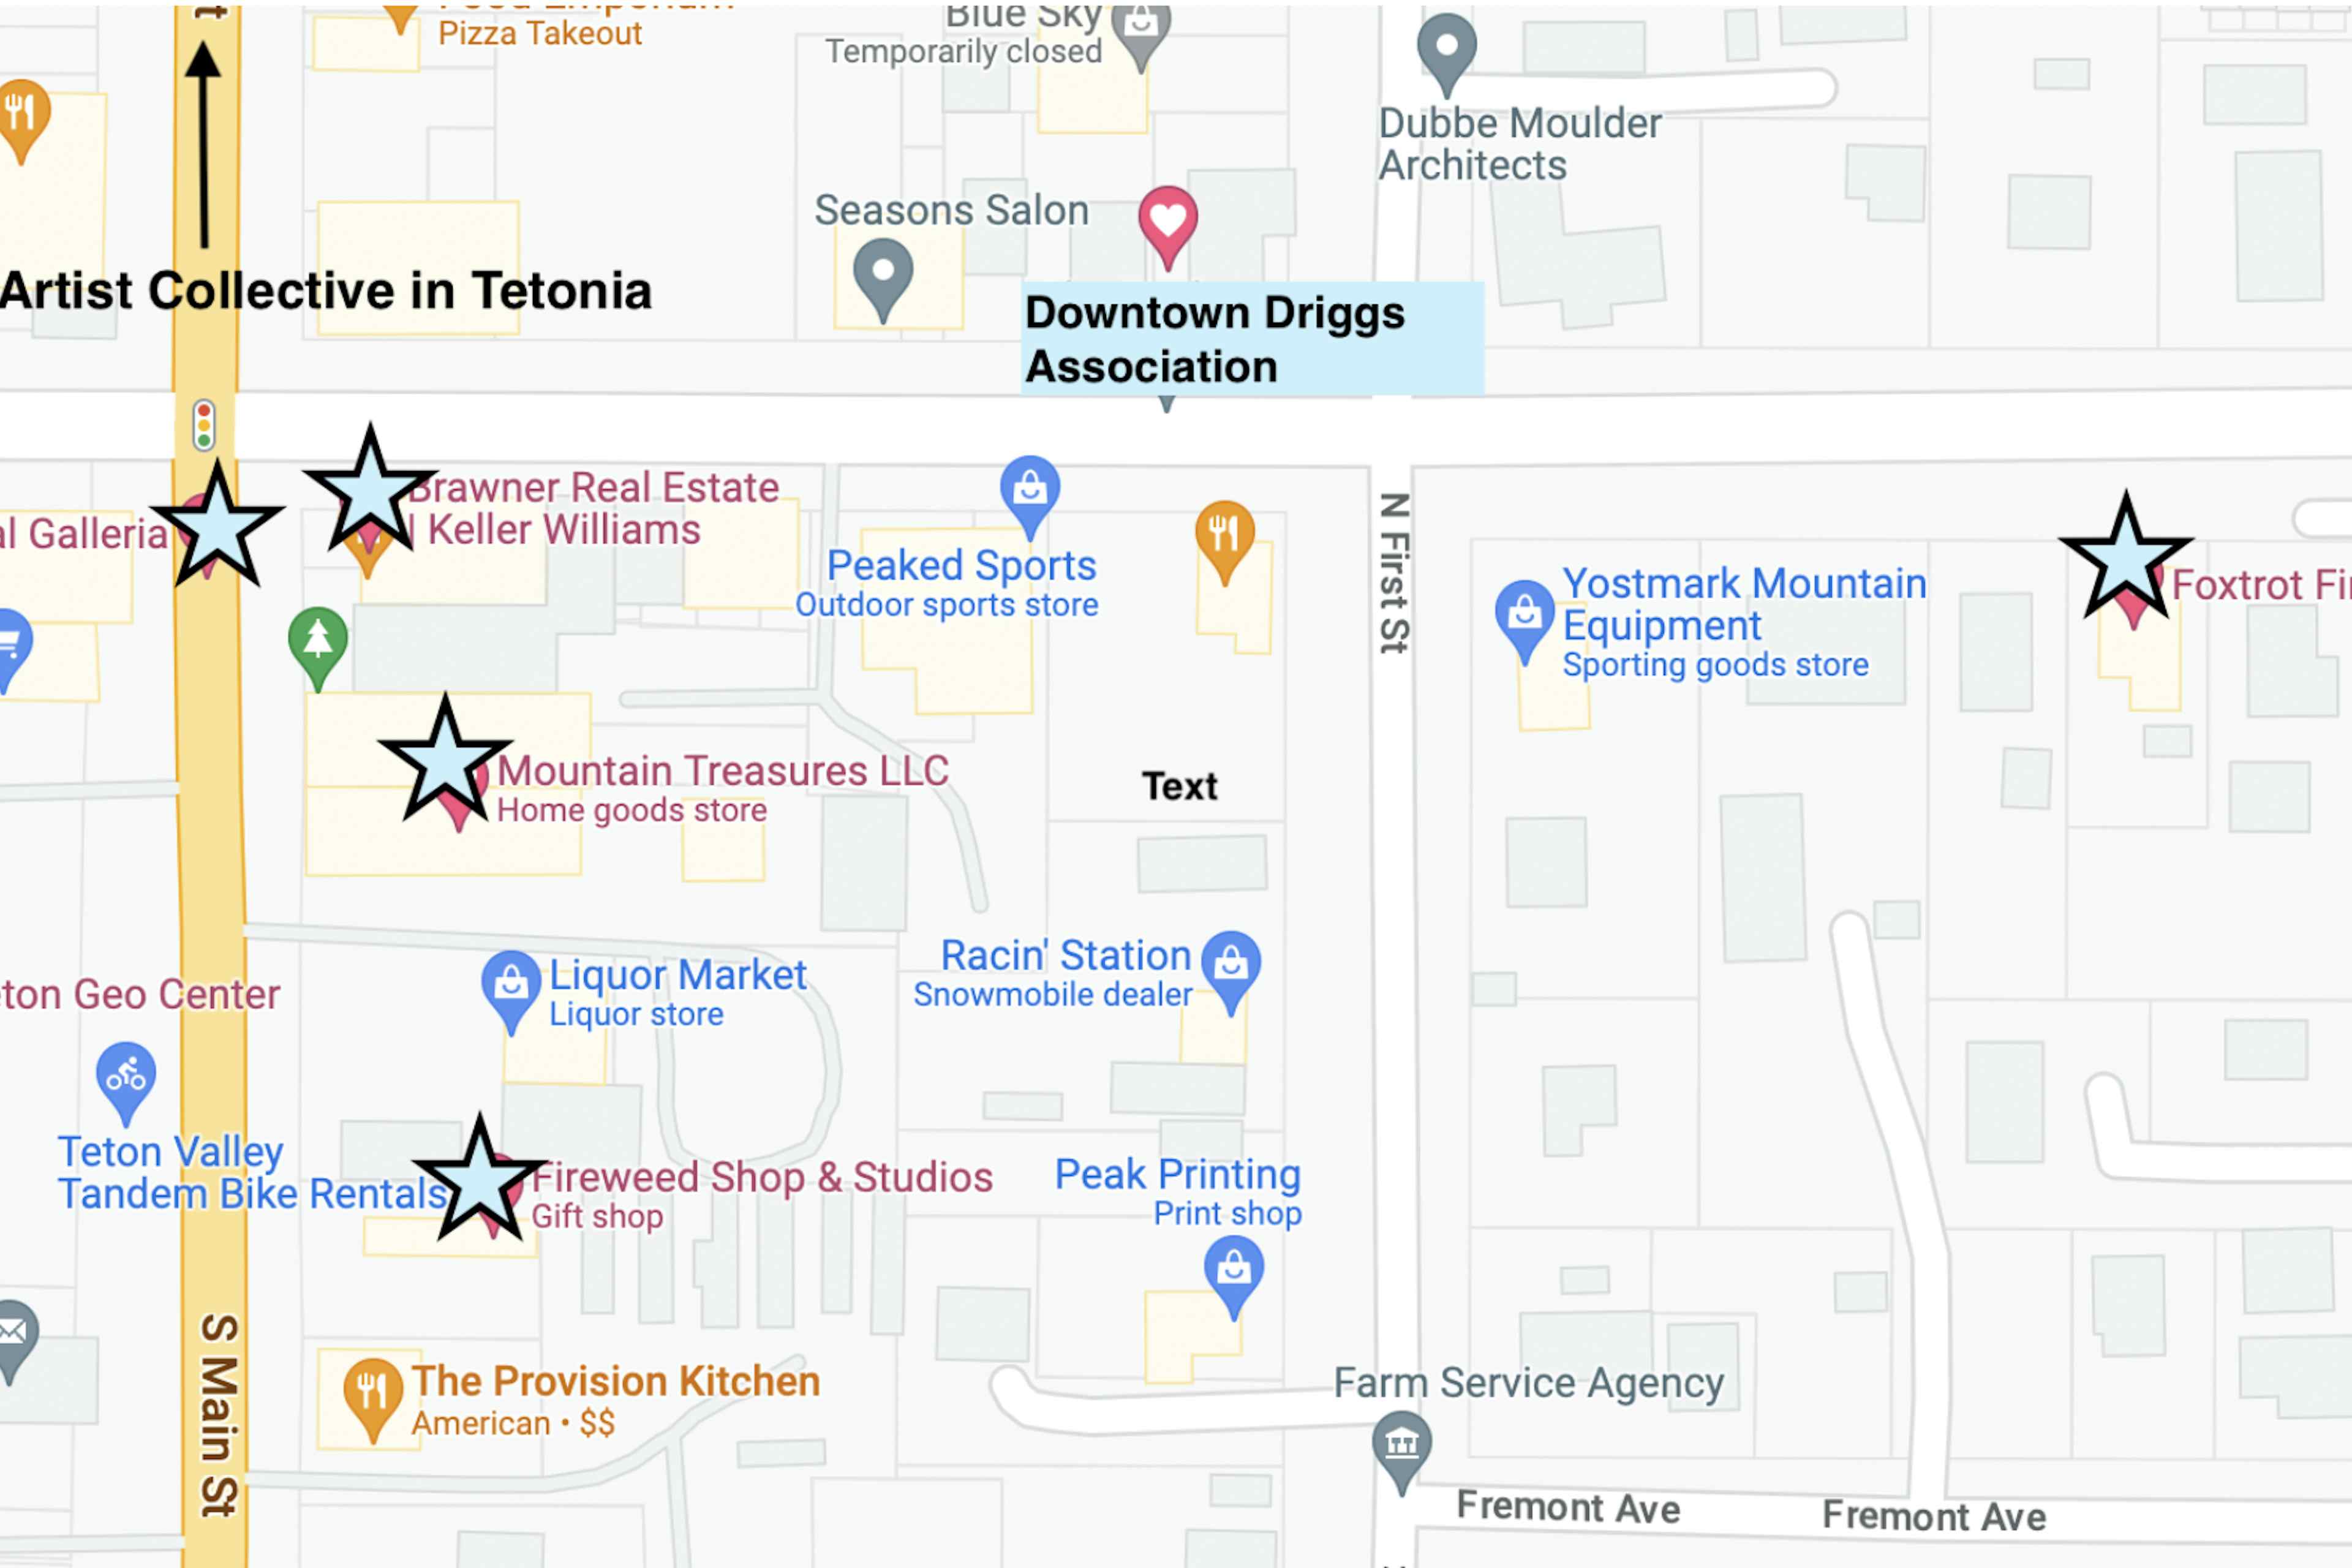 MAP OF FIRST FRIDAY ART WALKS IN DRIGGS ID IN YELLOWSTONE TETON TERRITITORY